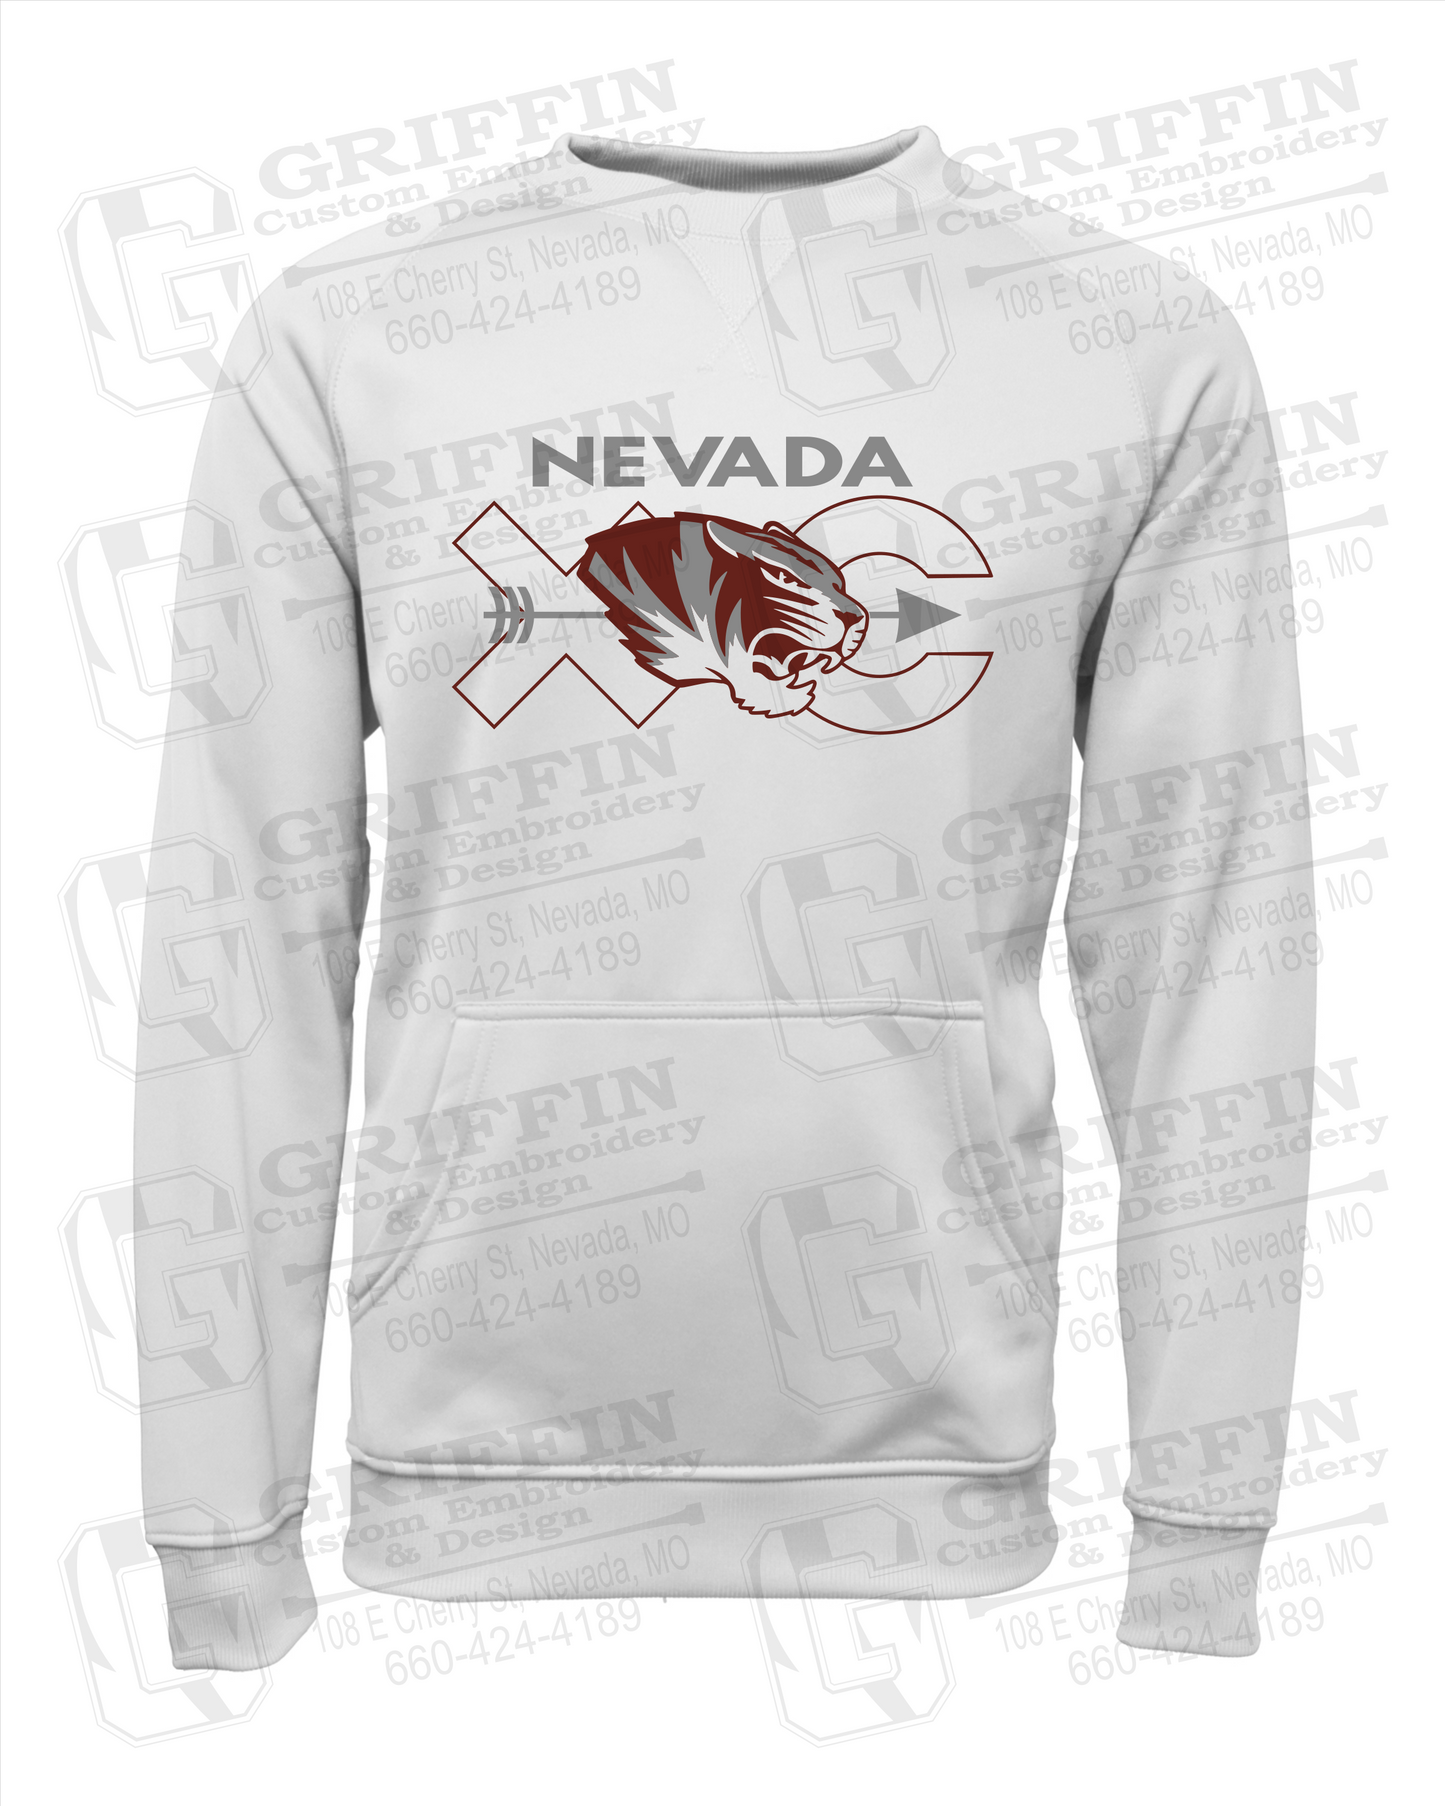 Nevada Tigers 23-T Sweatshirt - Cross Country